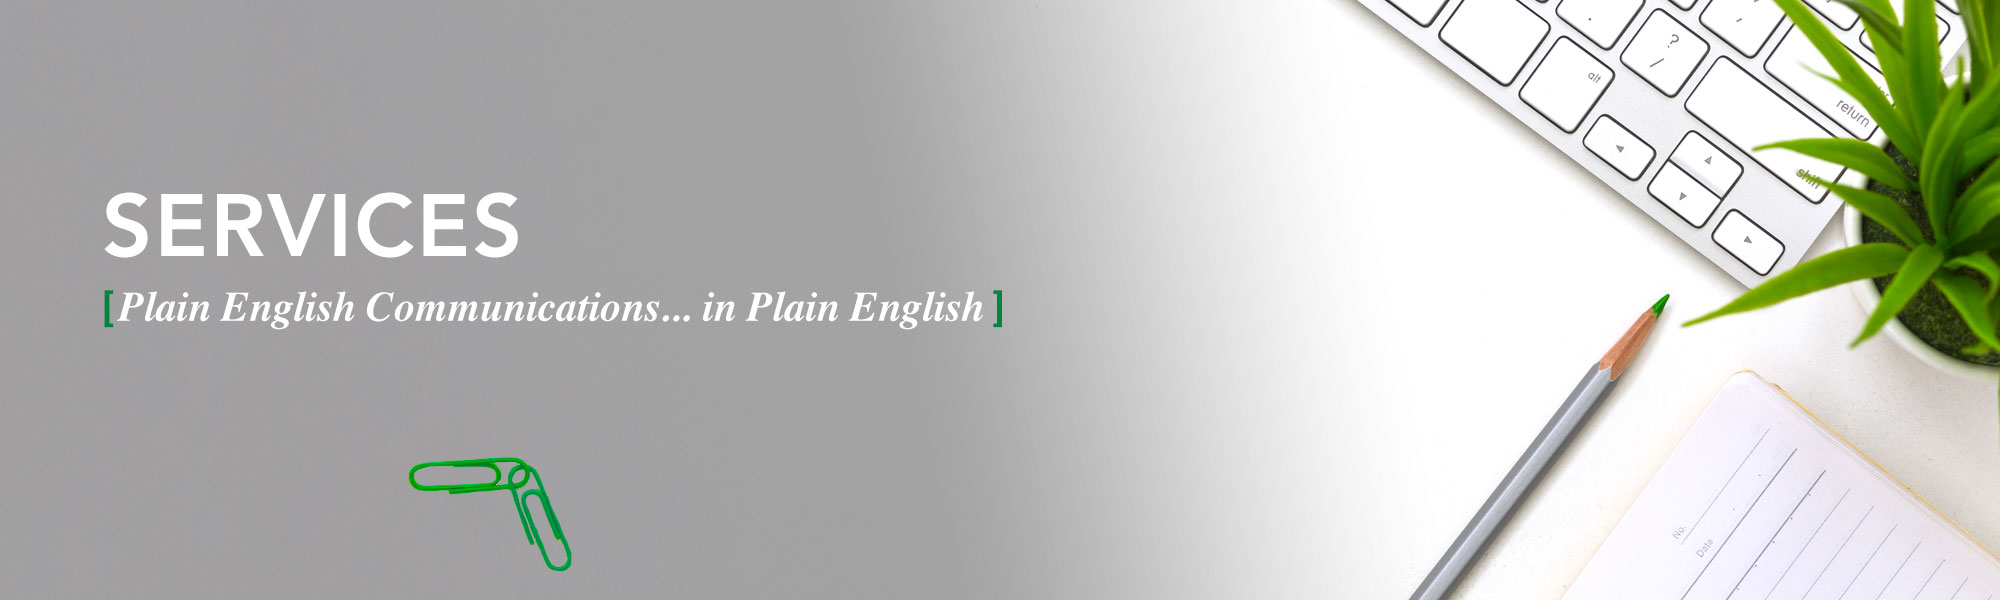 Services: Plain English Communications... in Plain English